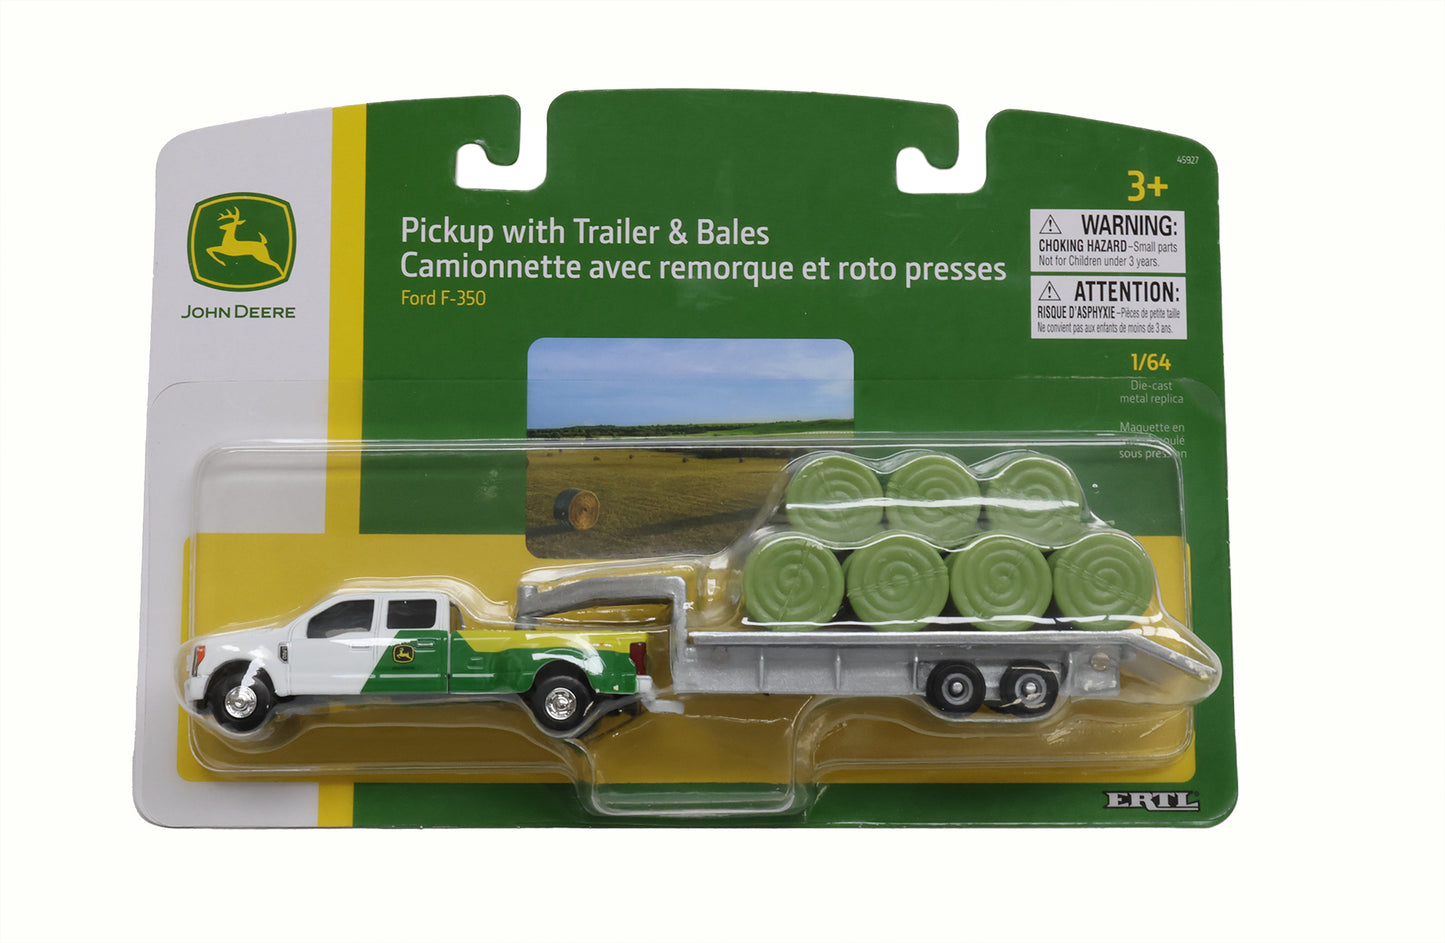 1/64 John Deere Pickup with Trailer & Bales Toy - LP84529